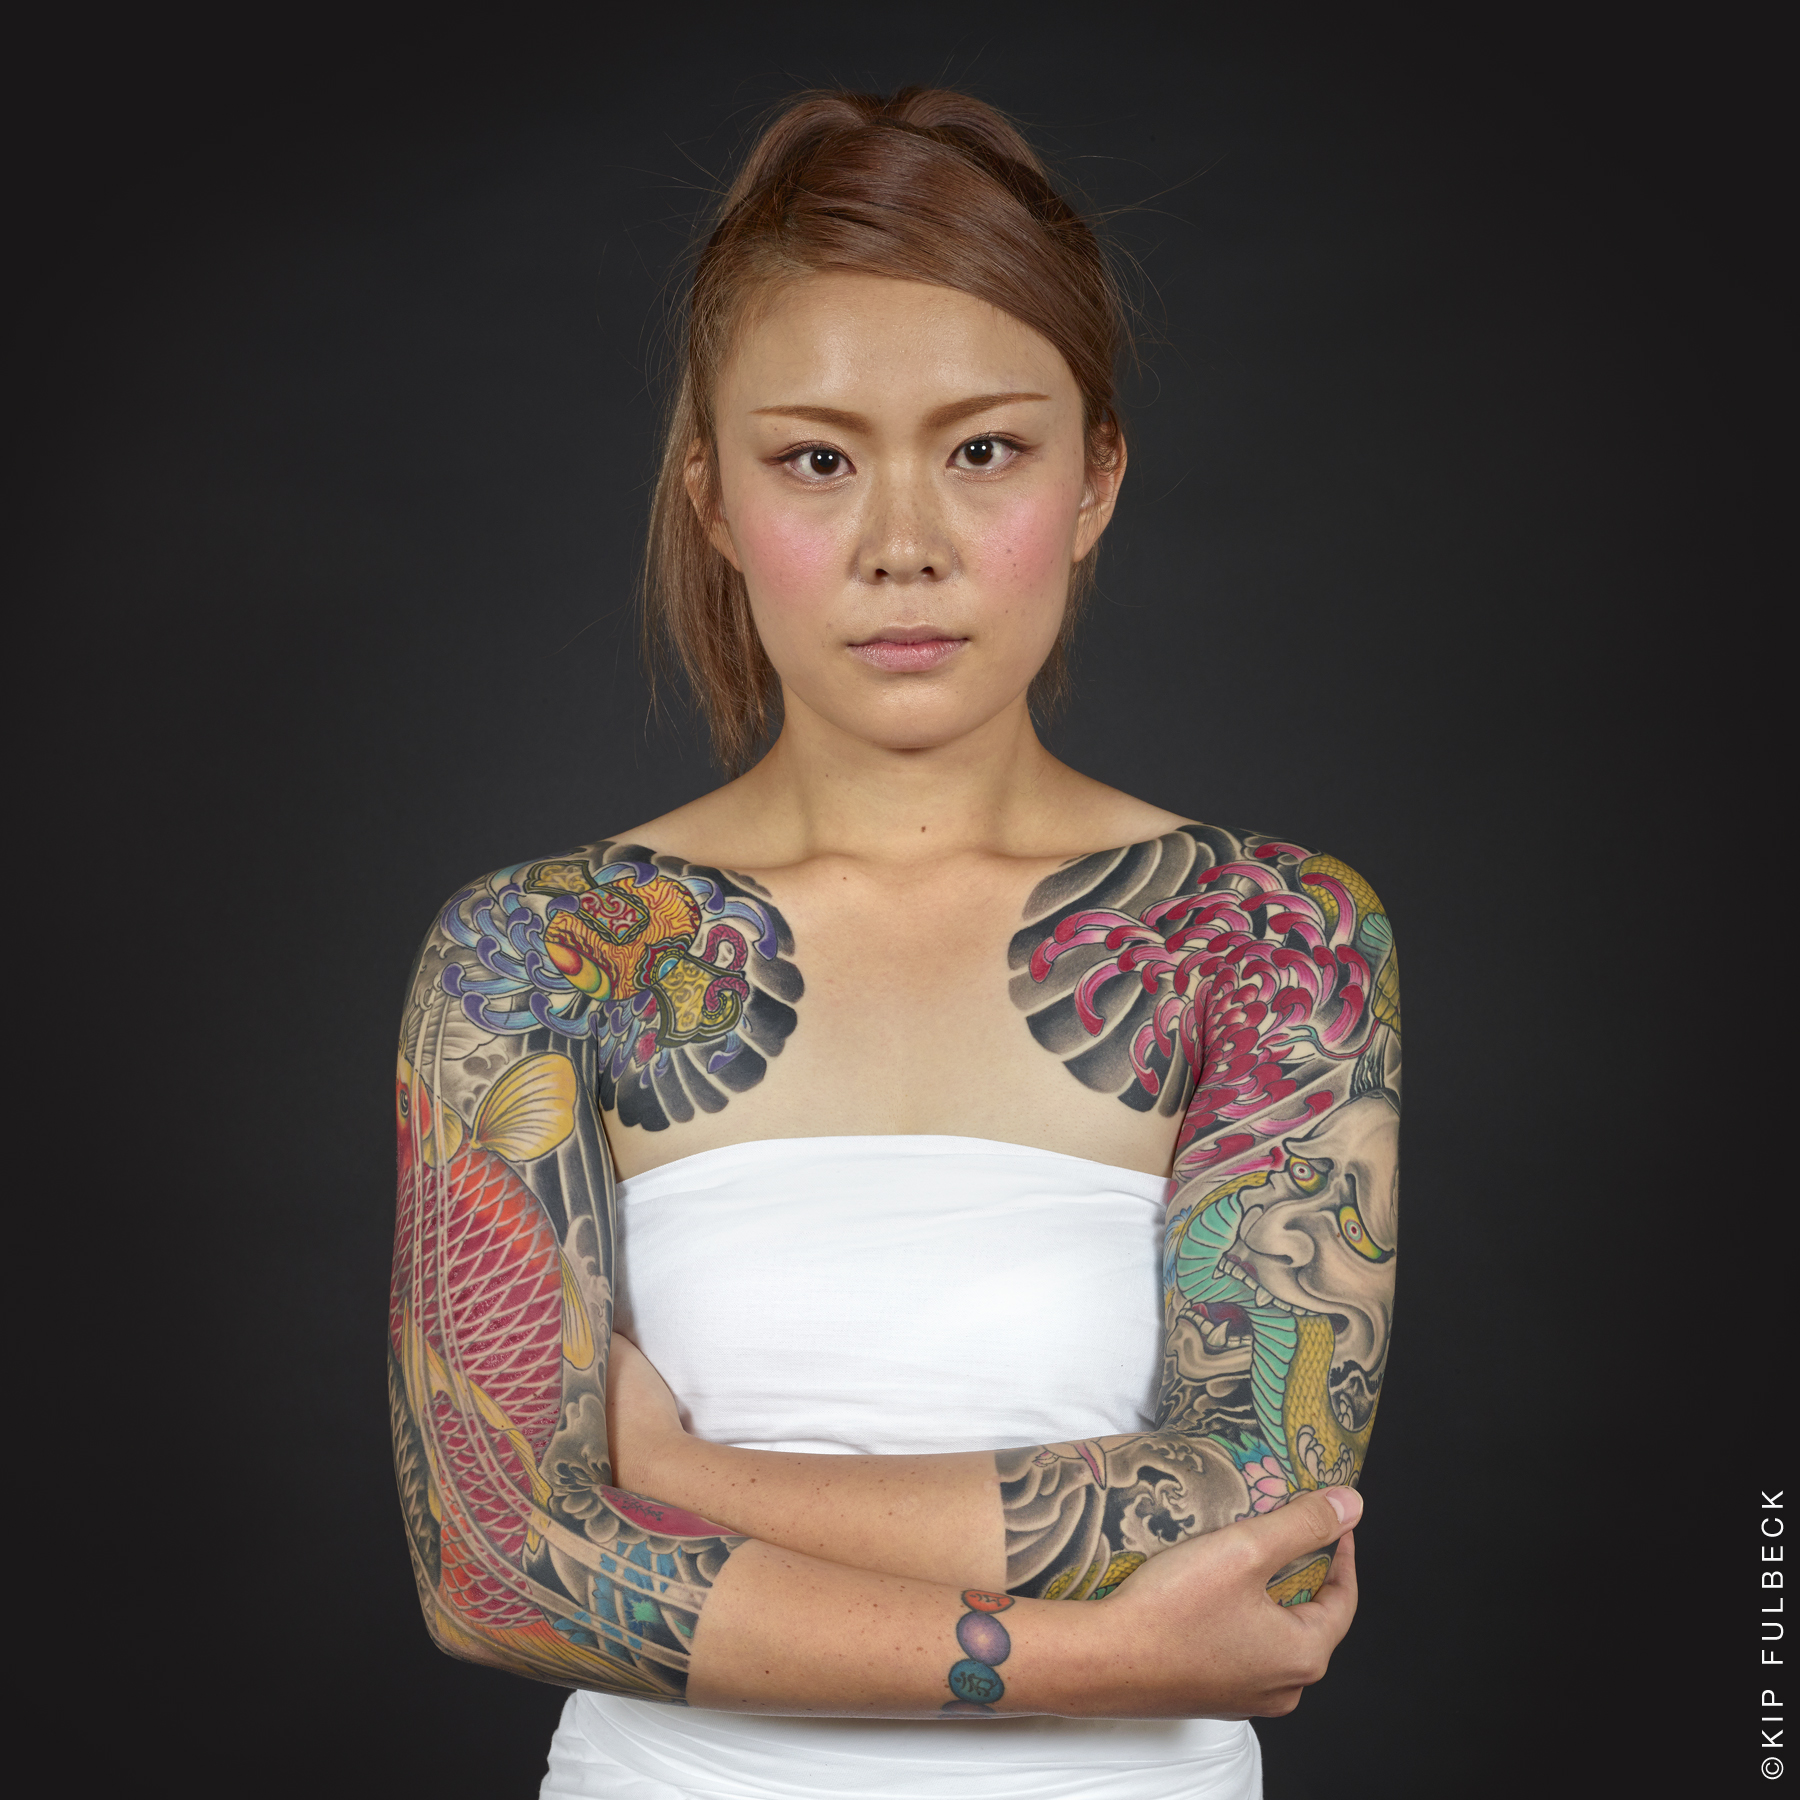 Tattoo by Horikiku. Photo by Kip Fulbeck